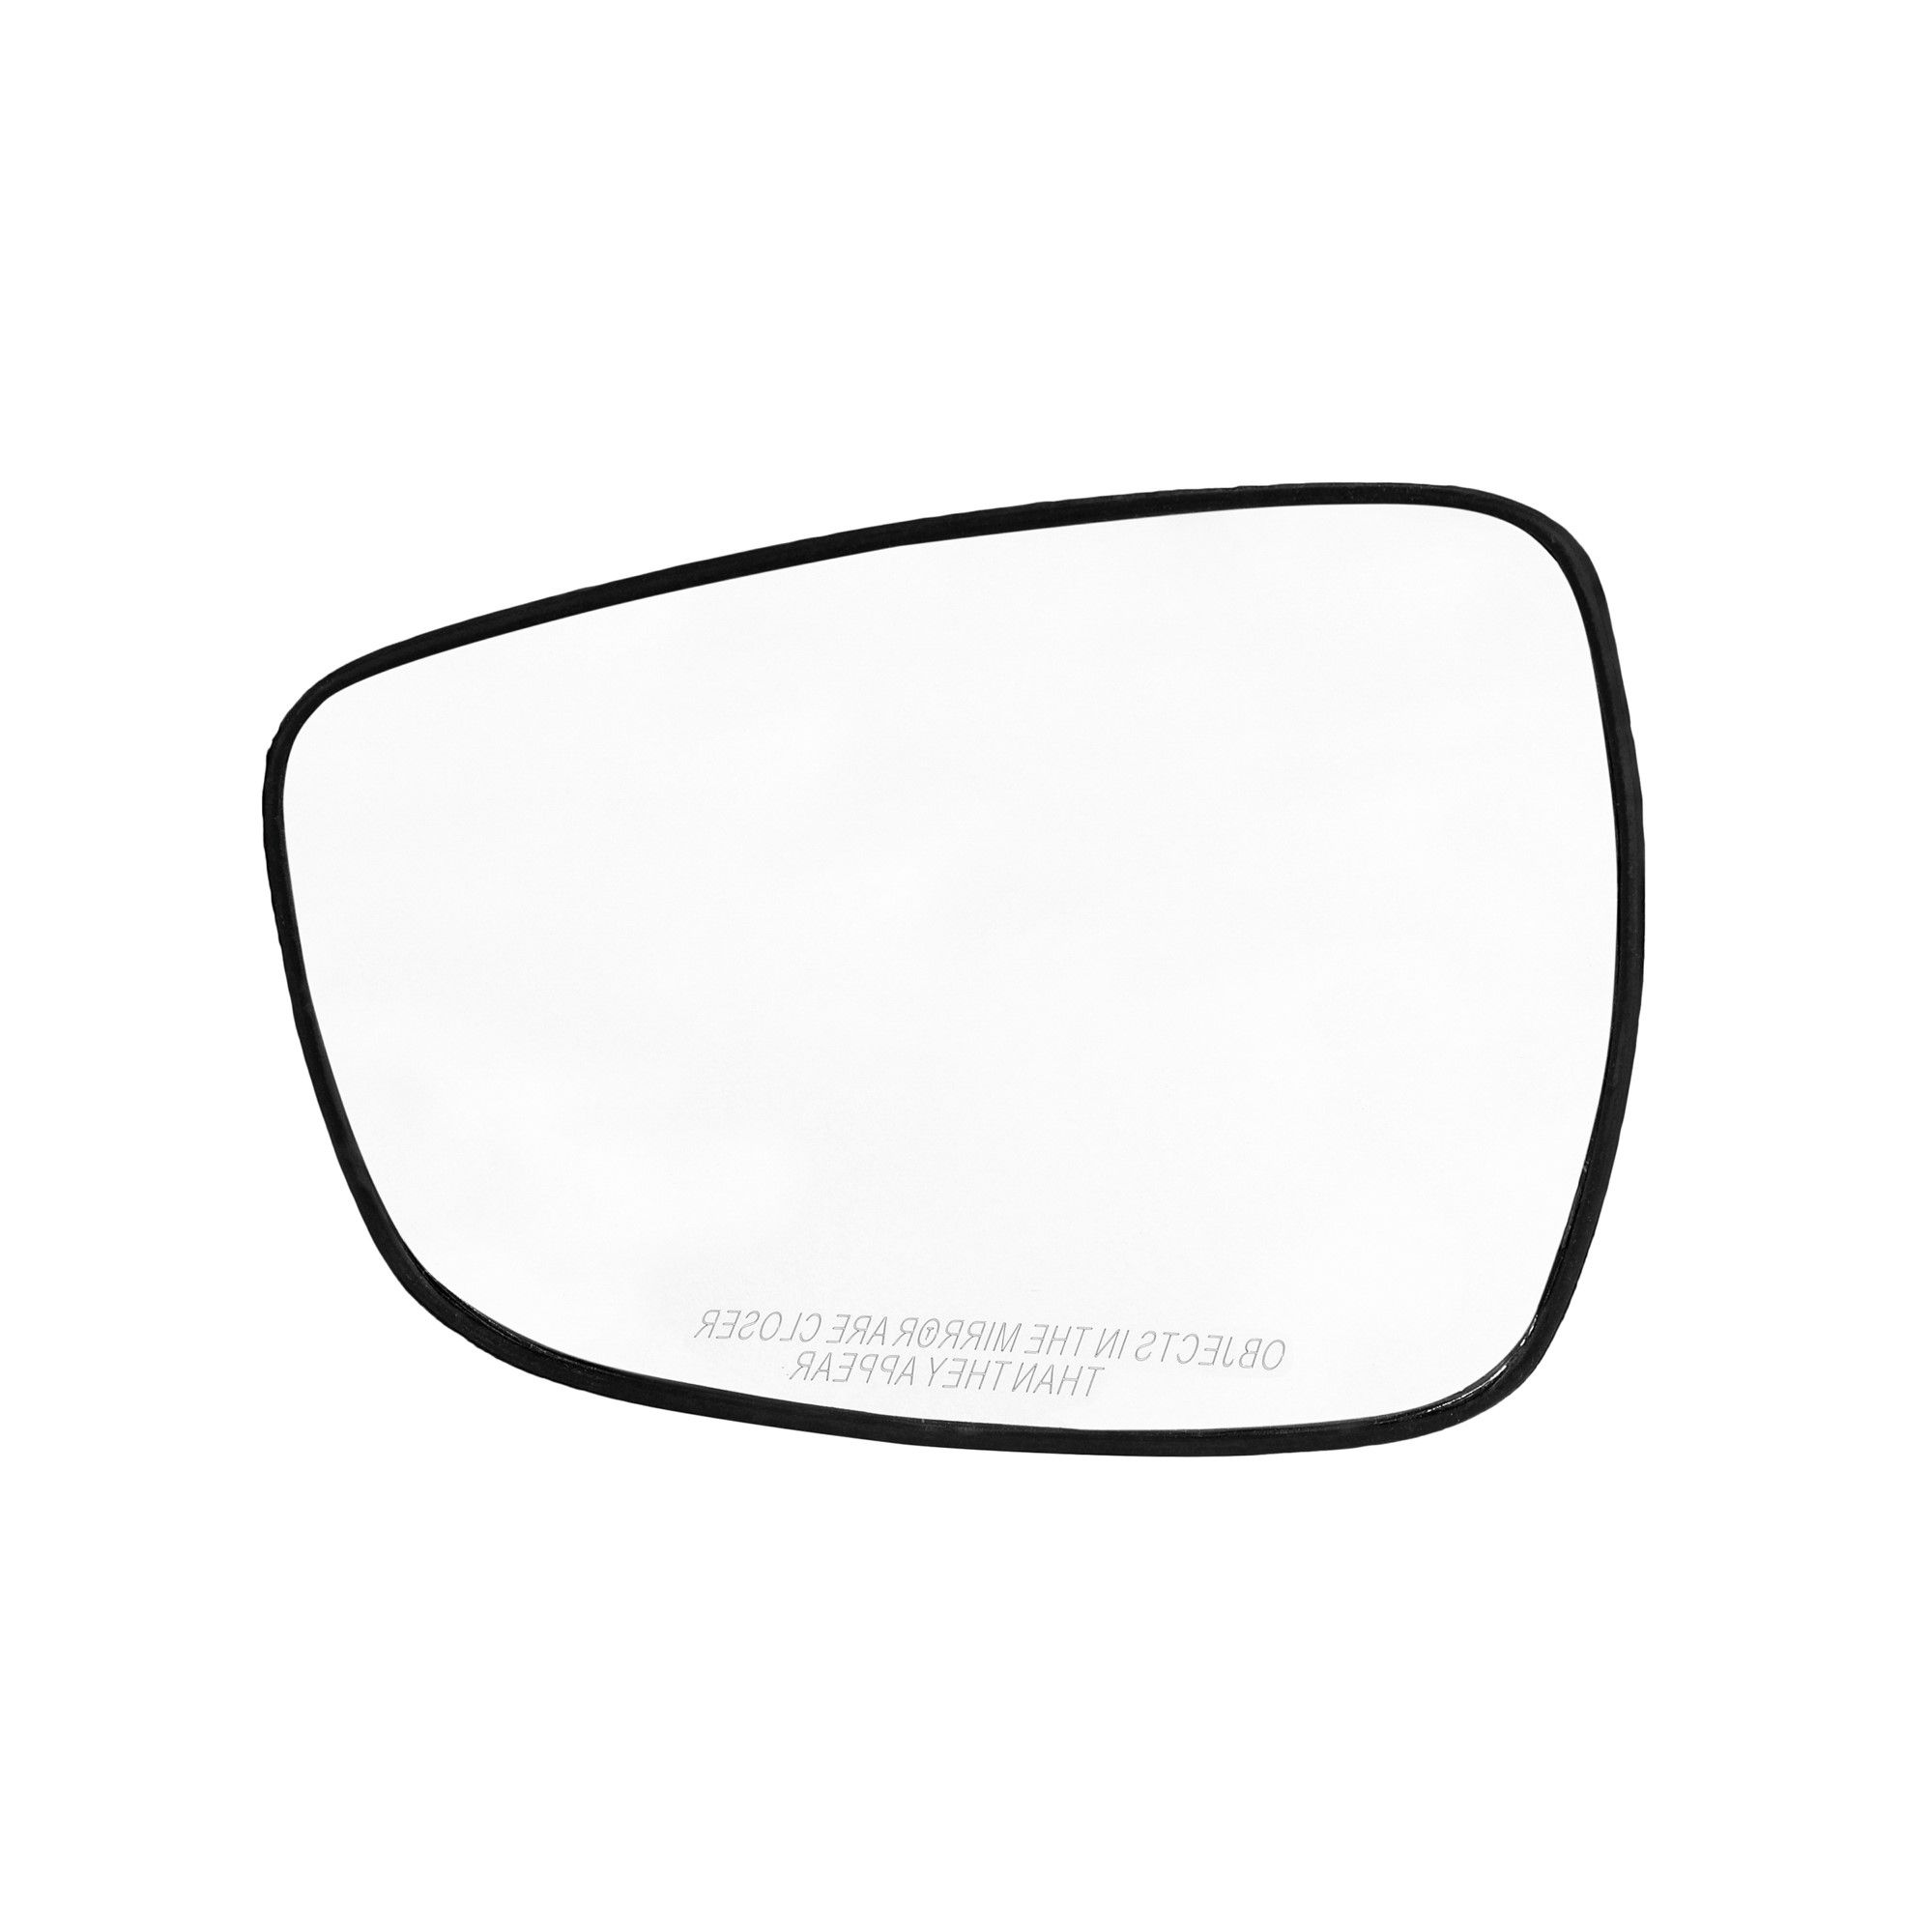 RMC Car Side Mirror Glass Plate (Sub Mirror Plate) suitable for Hyundai Verna Fluidic (2012-2015).